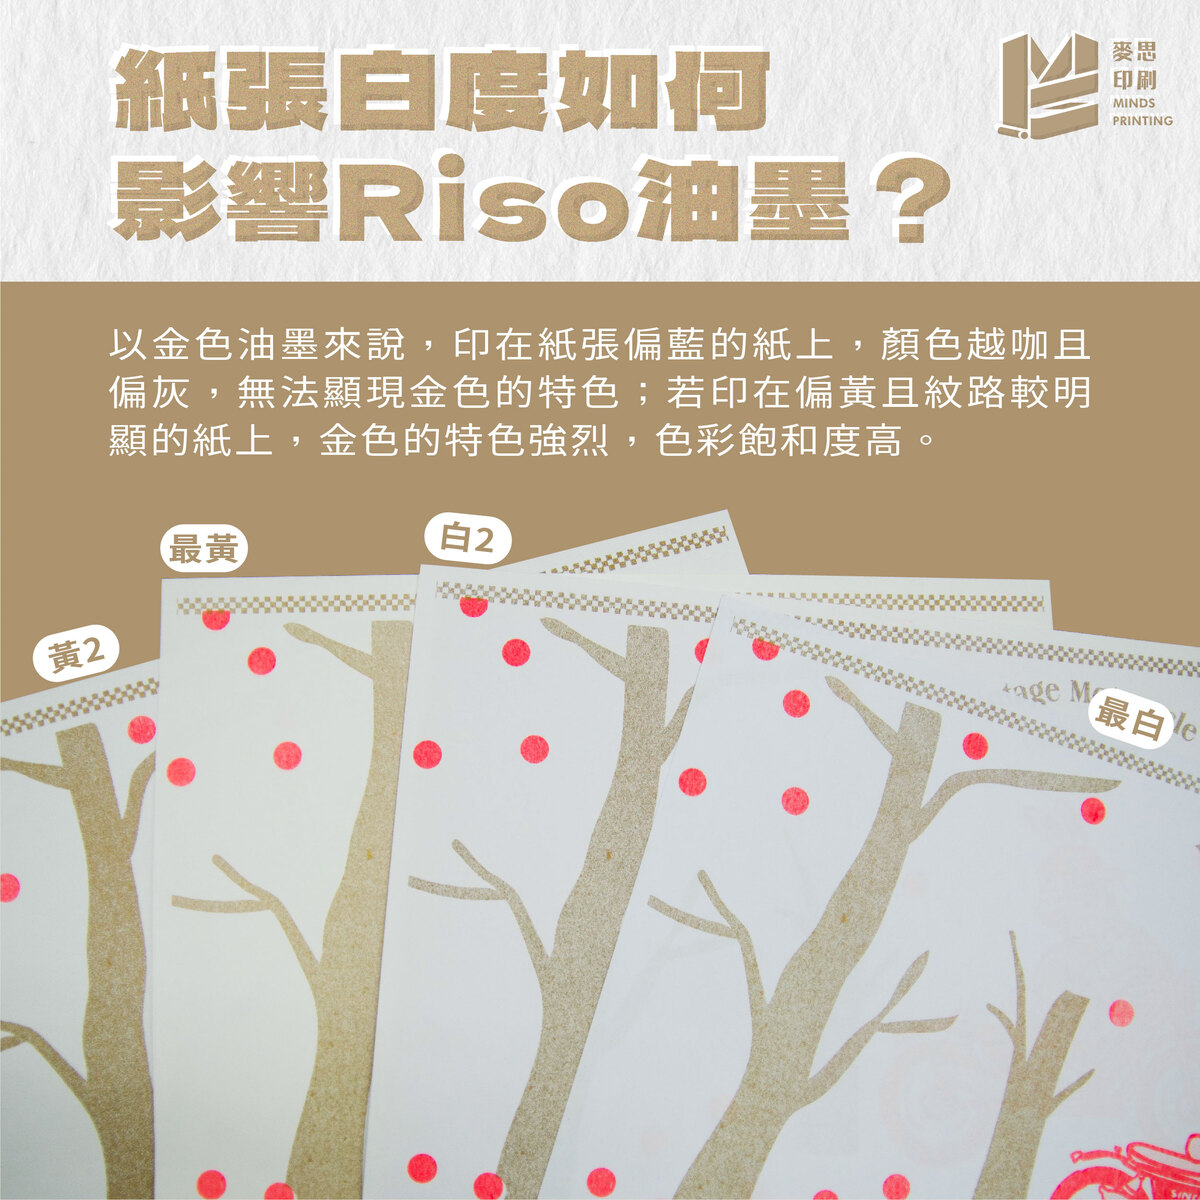 Risograph印在不同白度的紙張效果如何？-紙張白度如何影響RISO油墨？